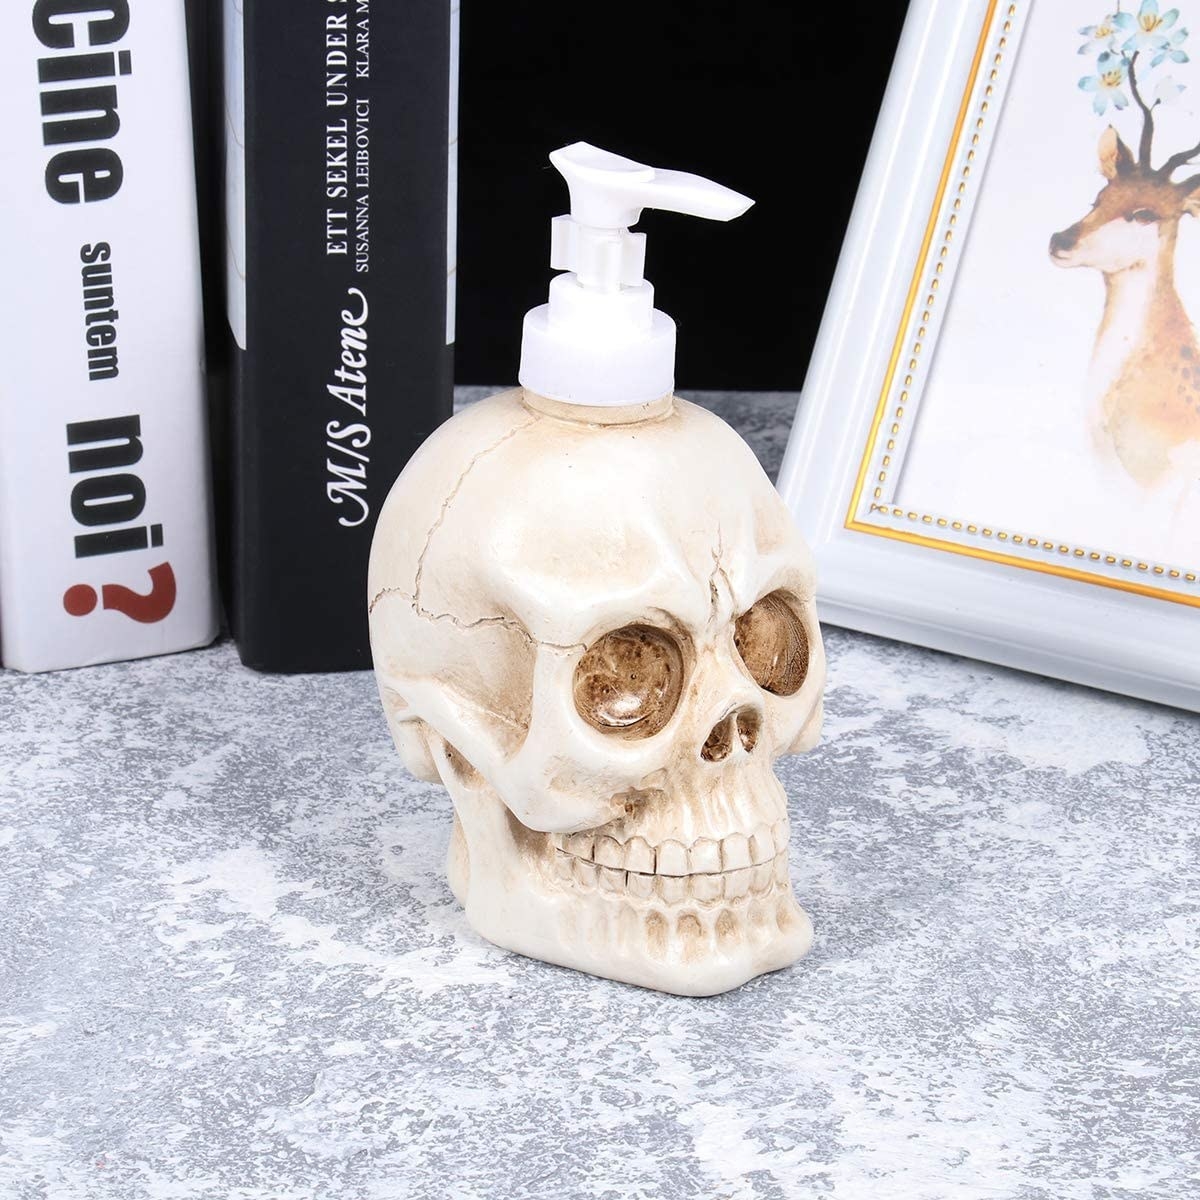 A soap dispenser shaped like a human skull